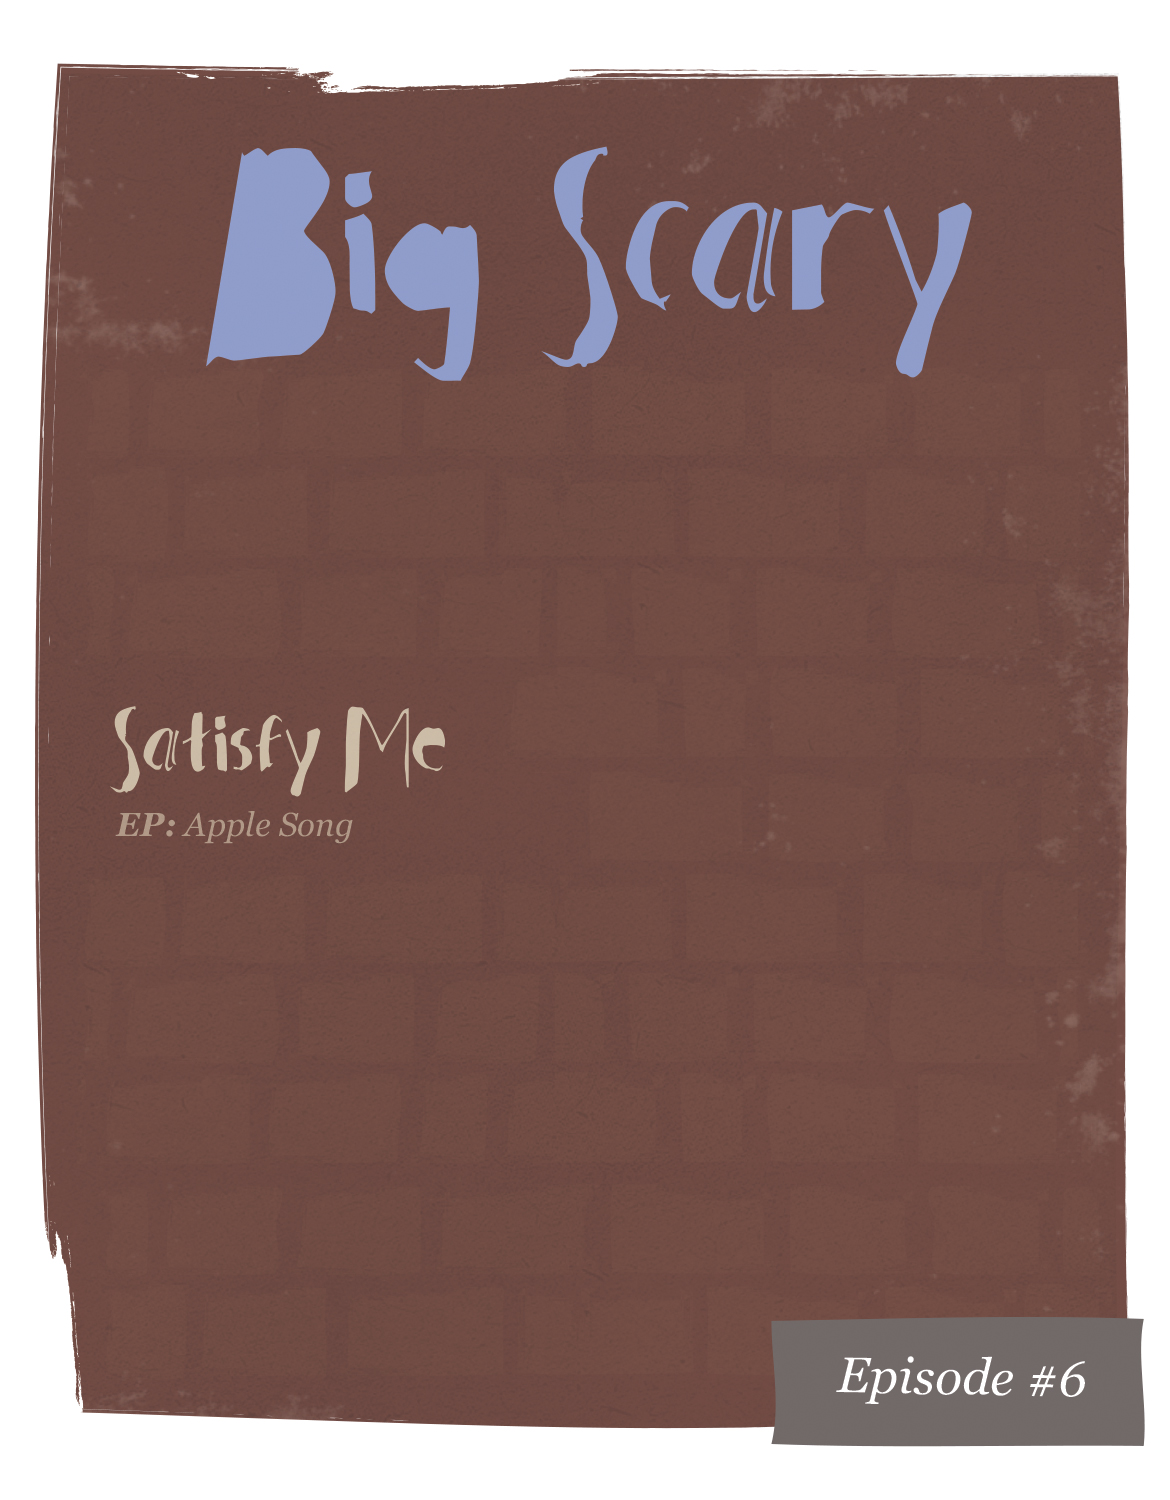 bigscary_postcard2